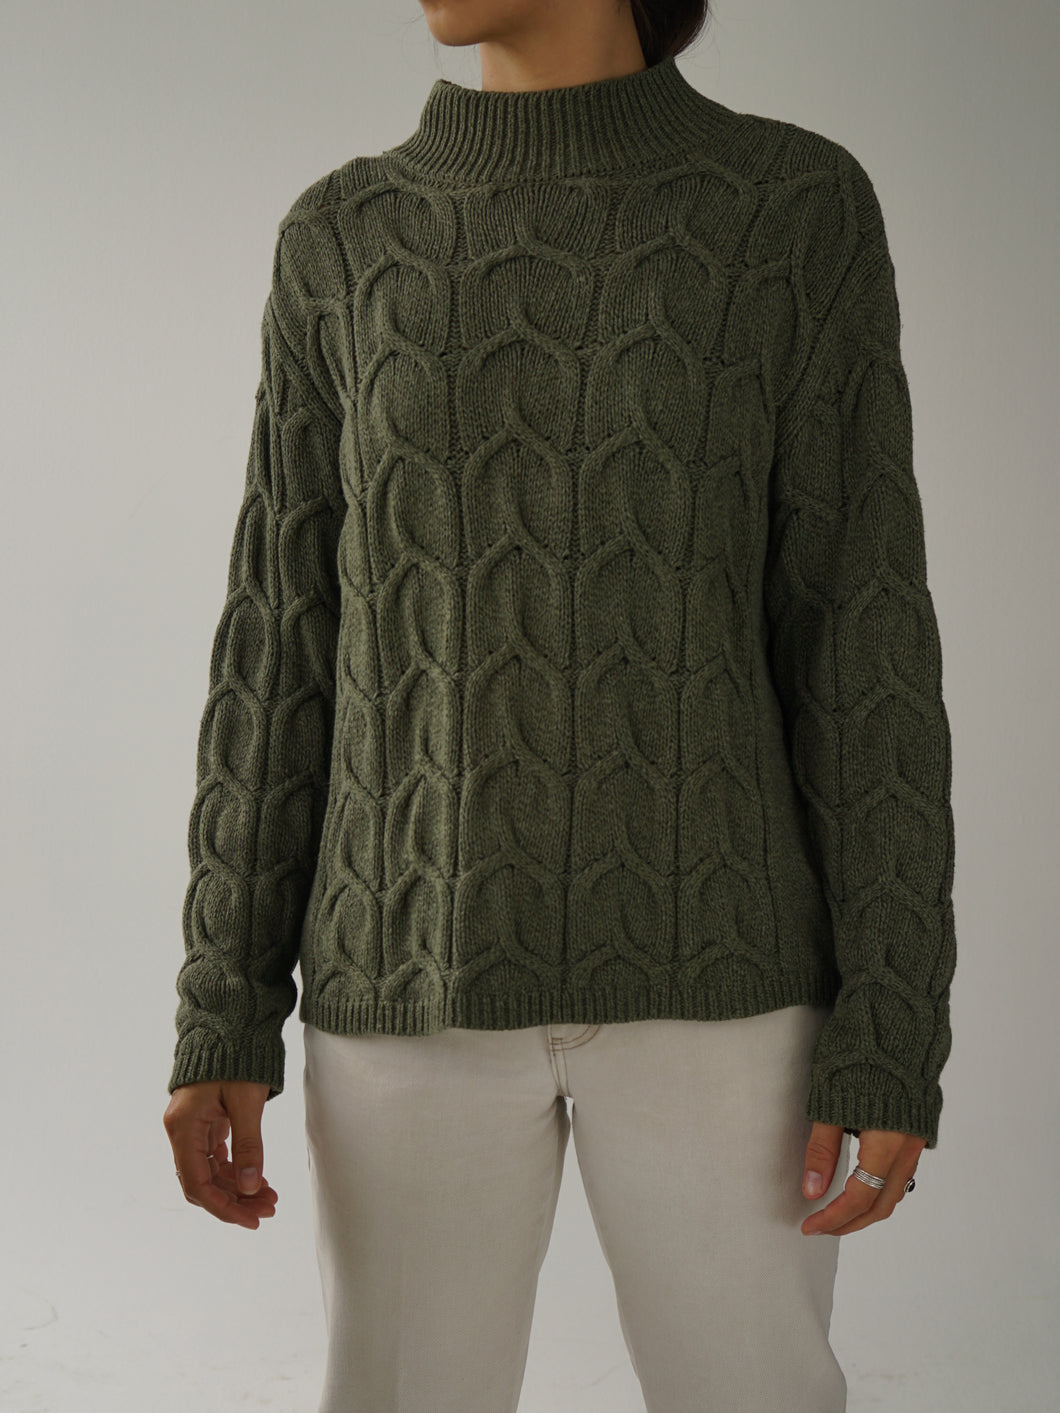 Khaki Parkhurst sweater made in Canada